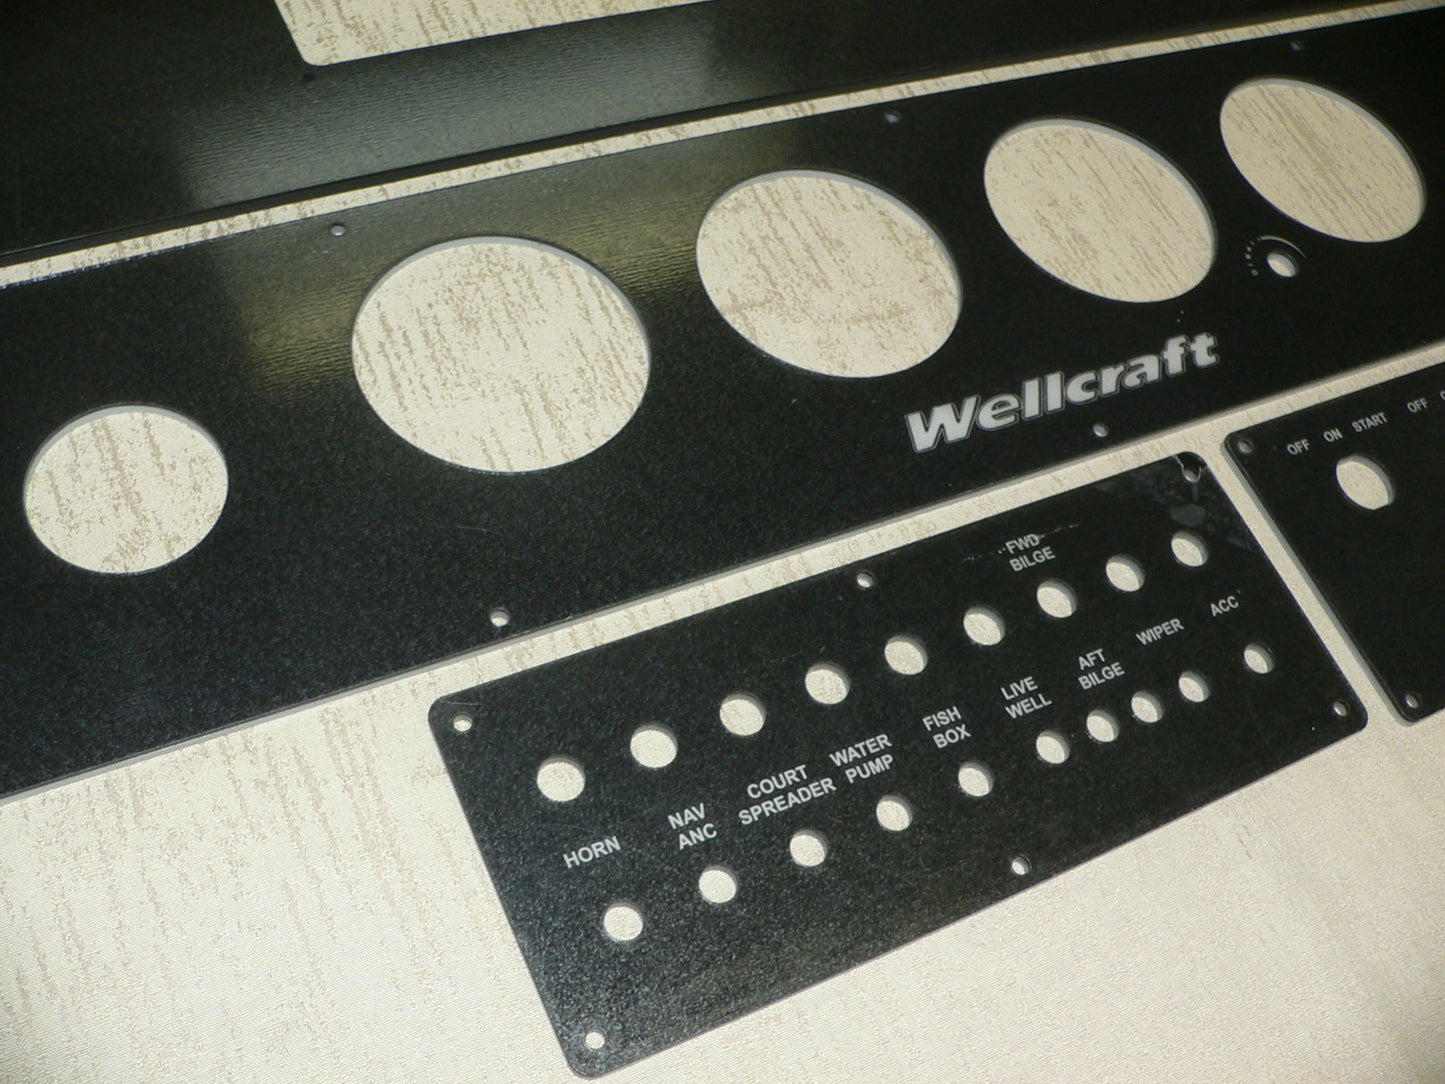 Wellcraft Reproduction Dash Panel set 1999 -2005 ish - many models